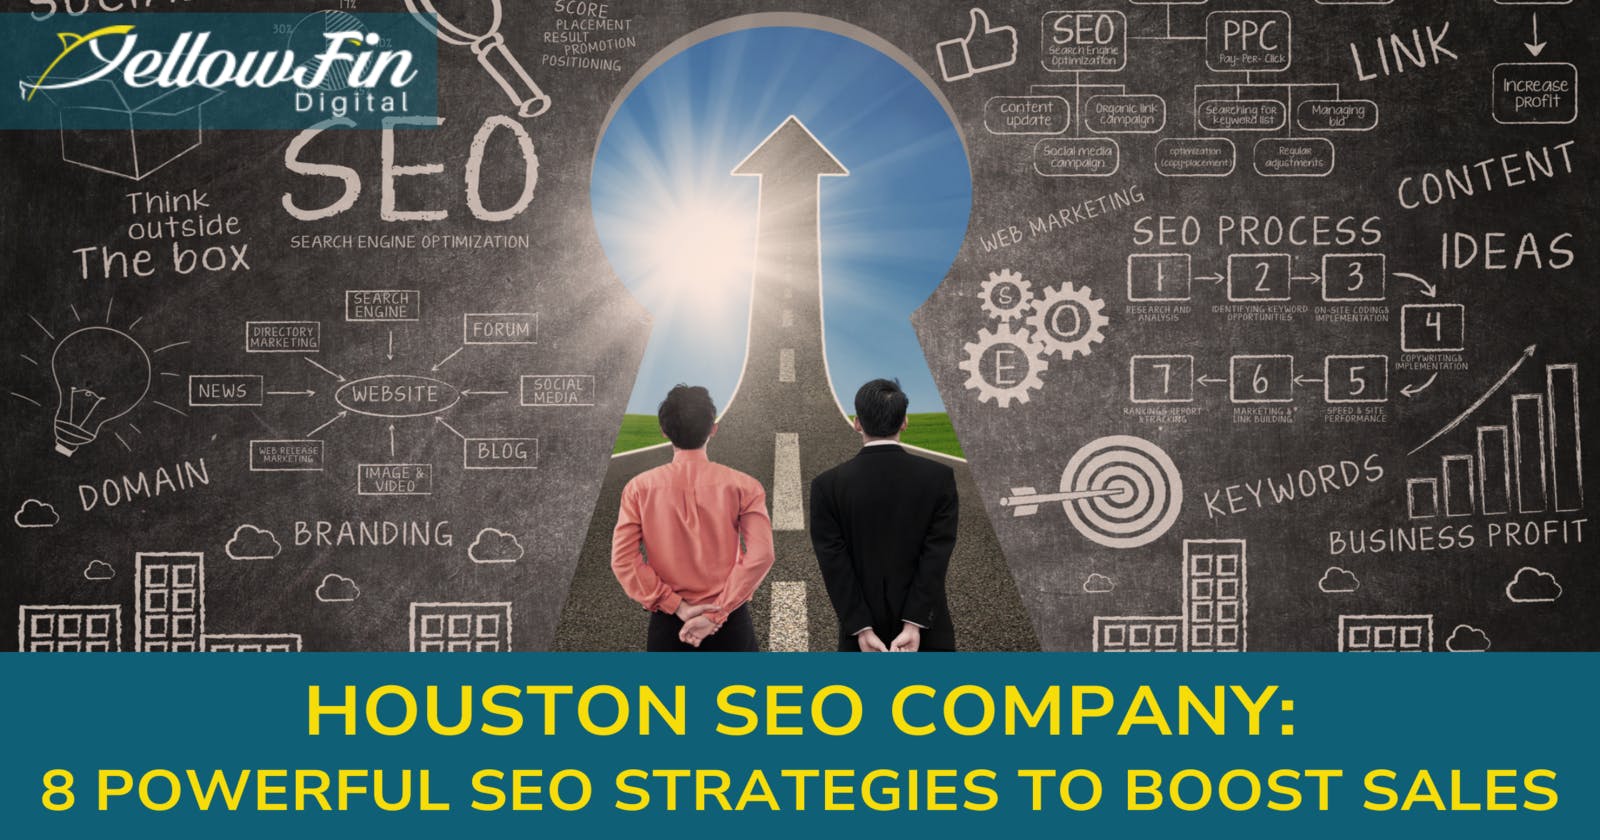 Houston SEO Company: 8 Powerful SEO Strategies to Boost Sales